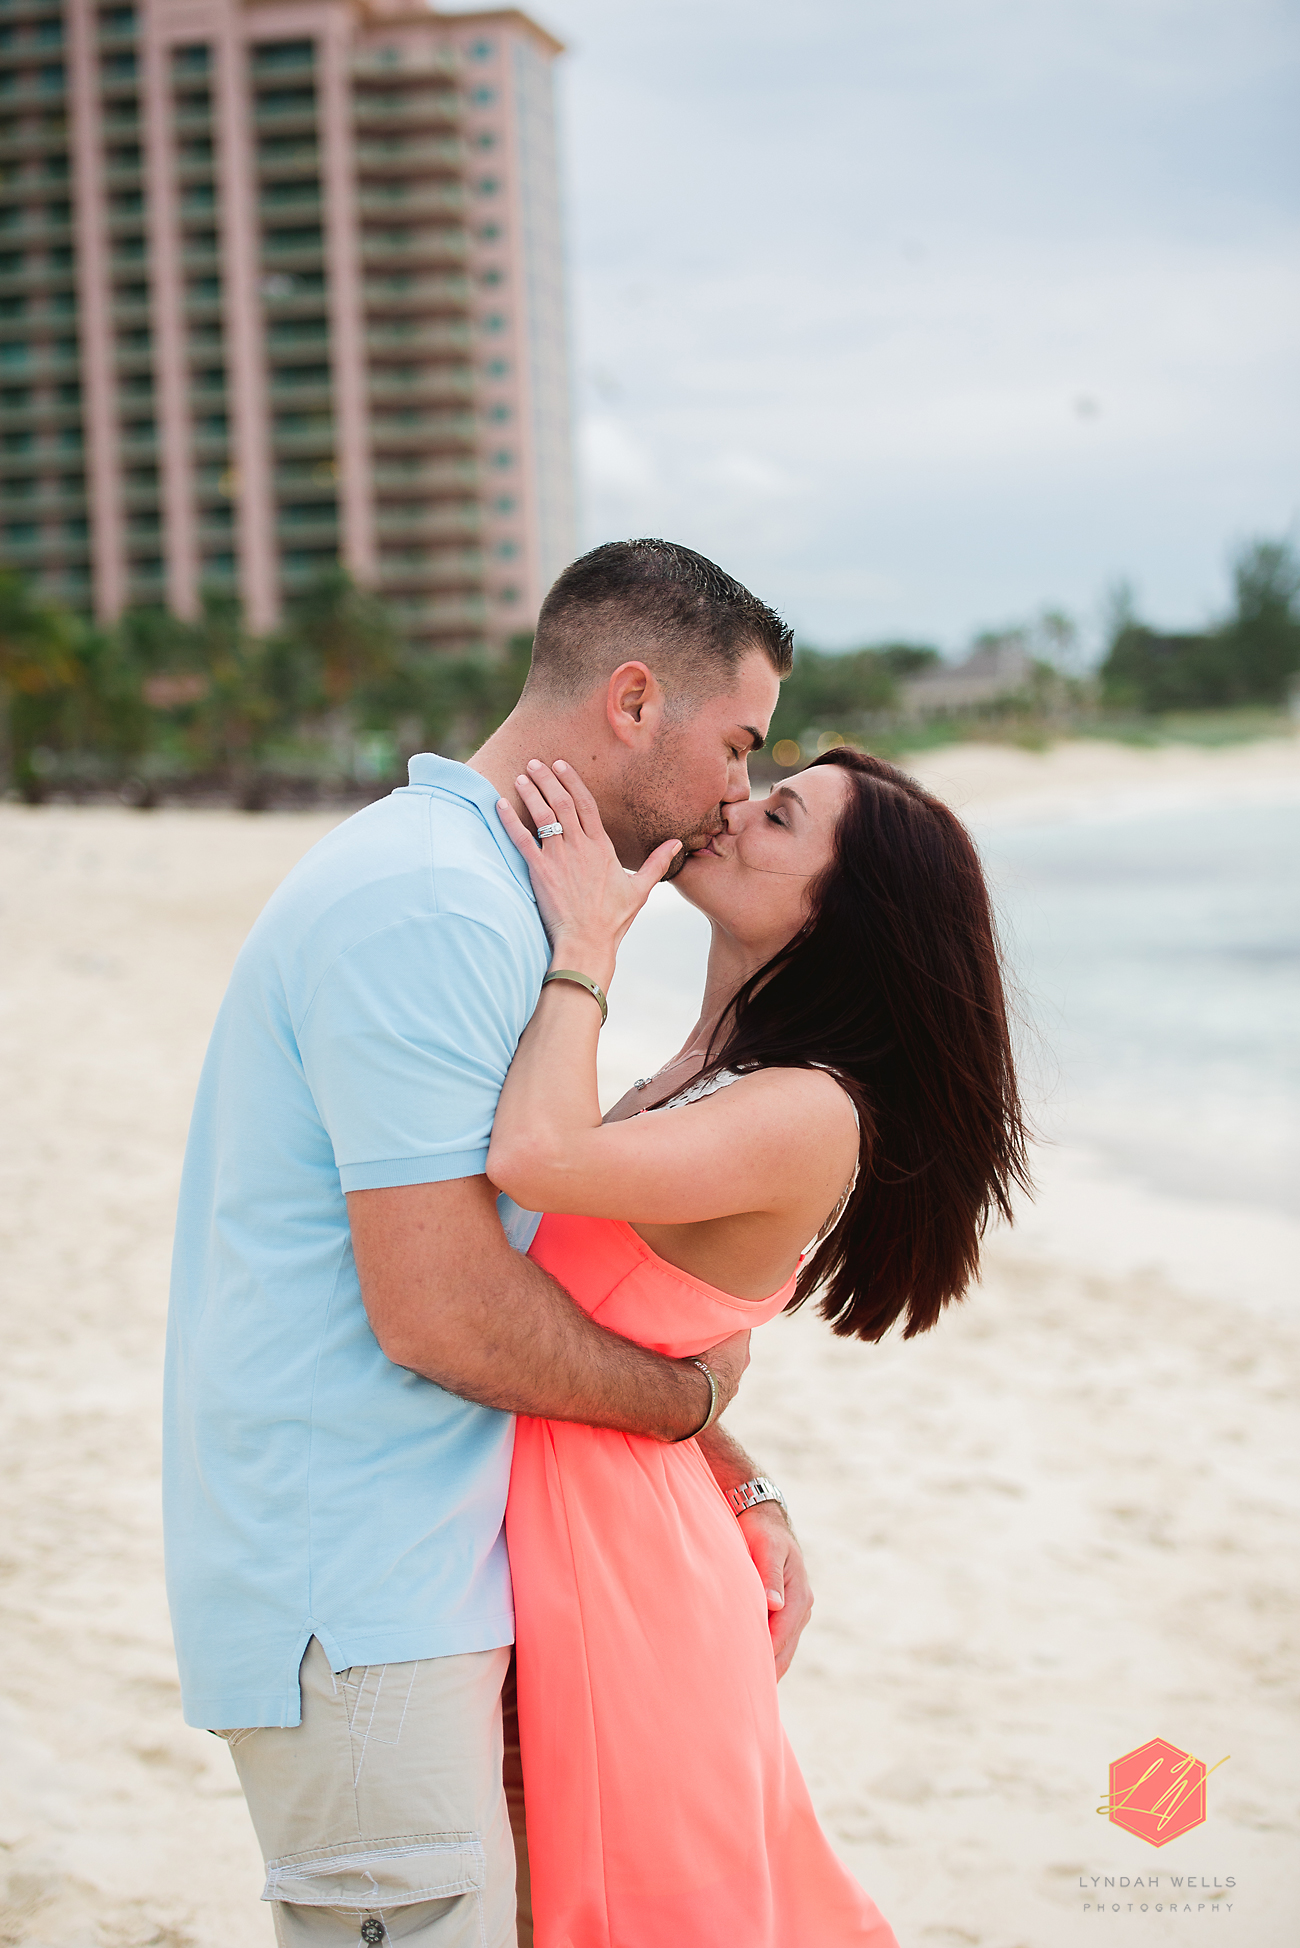 surprise proposal, proposal, engaged, engagement ring, Atlantis, beach, Atlantis bahamas, bahamas engagement session, bahamas photographer,